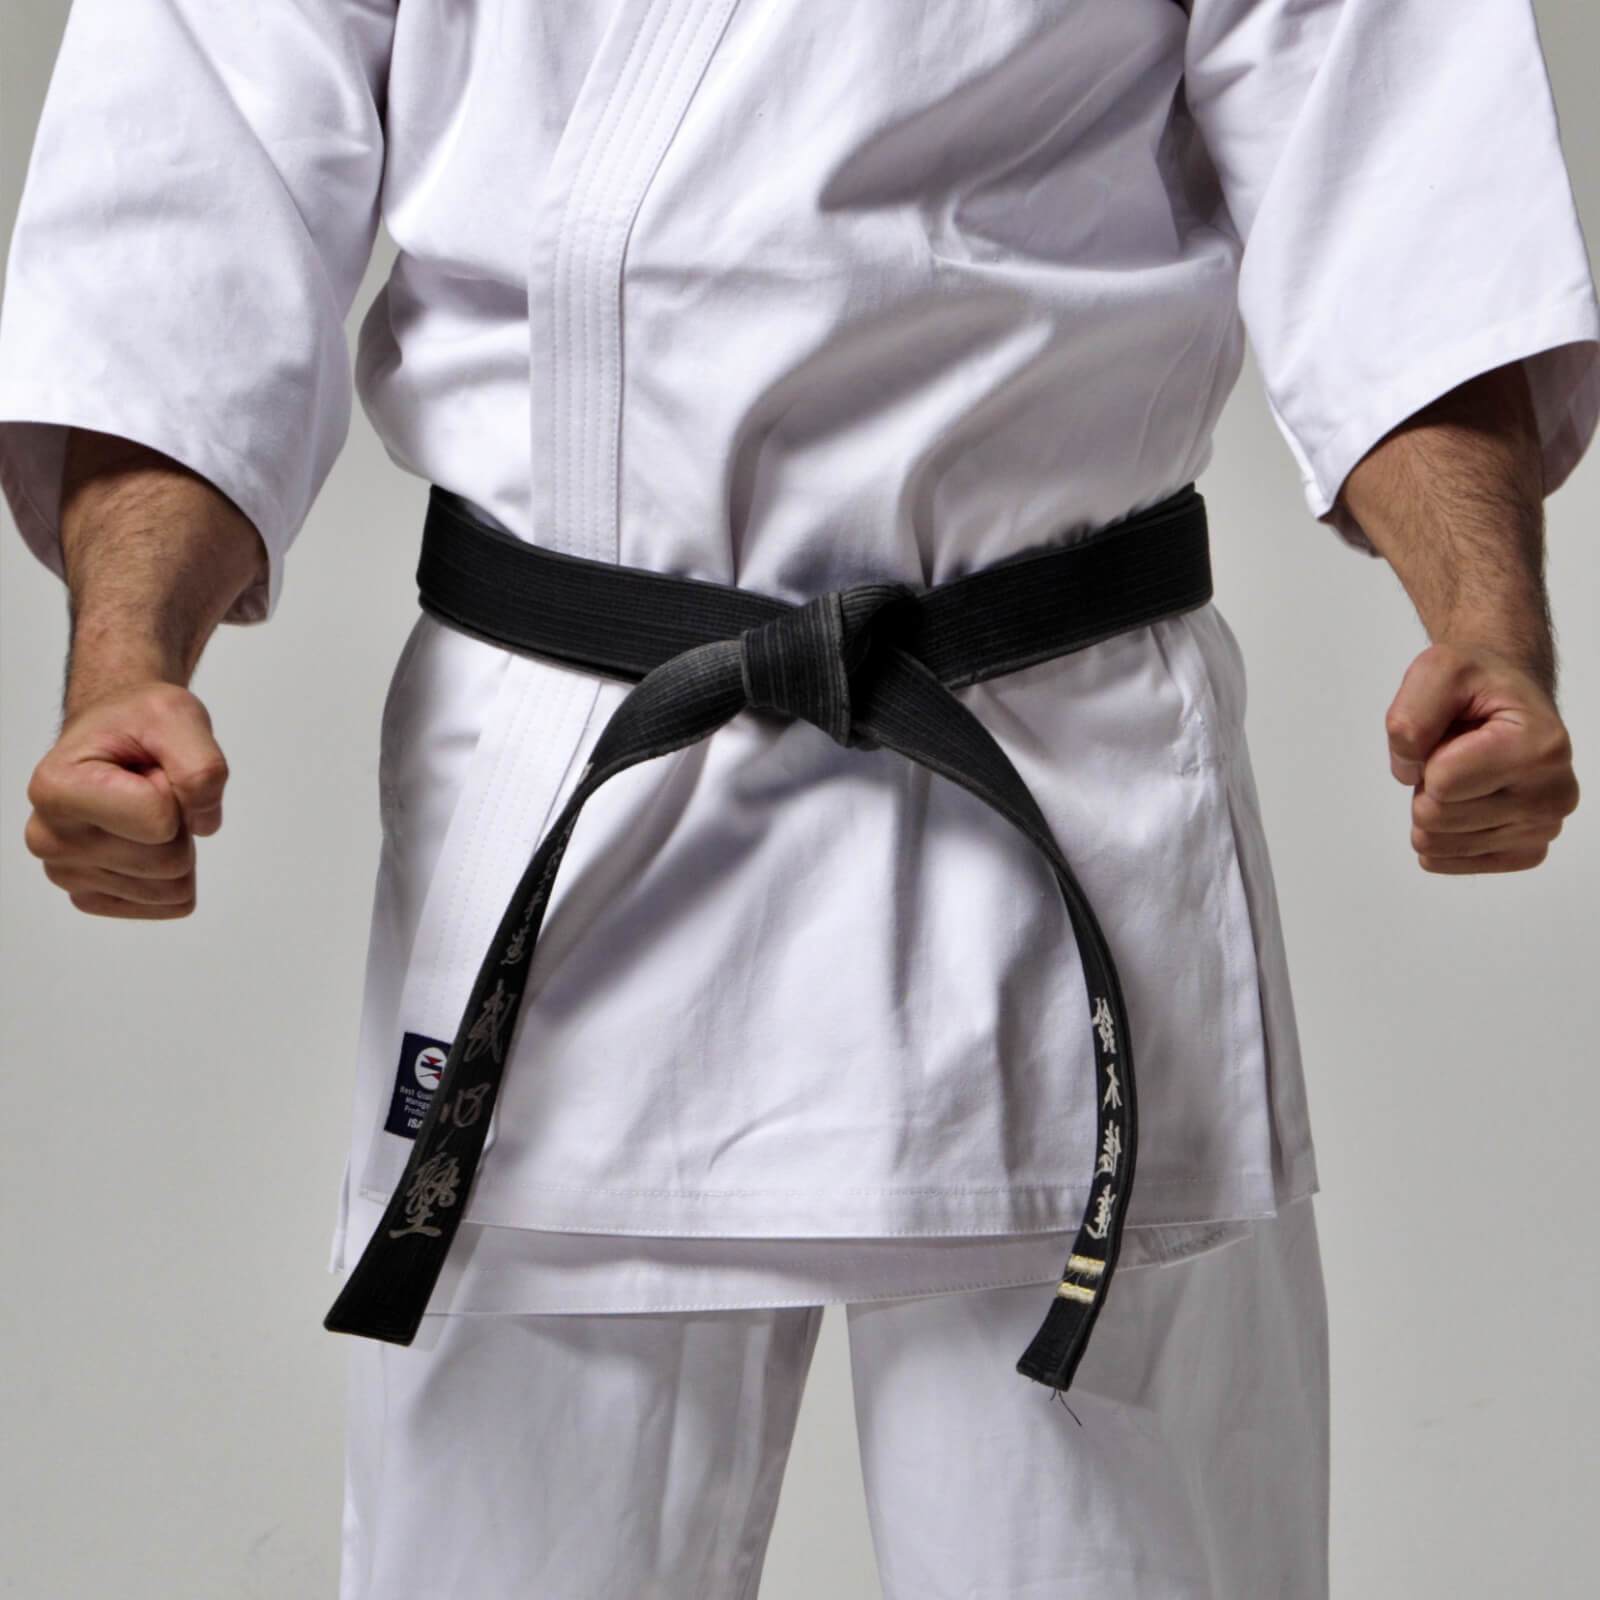 Isami Karate Black Belt Premium-Isami-ChokeSports